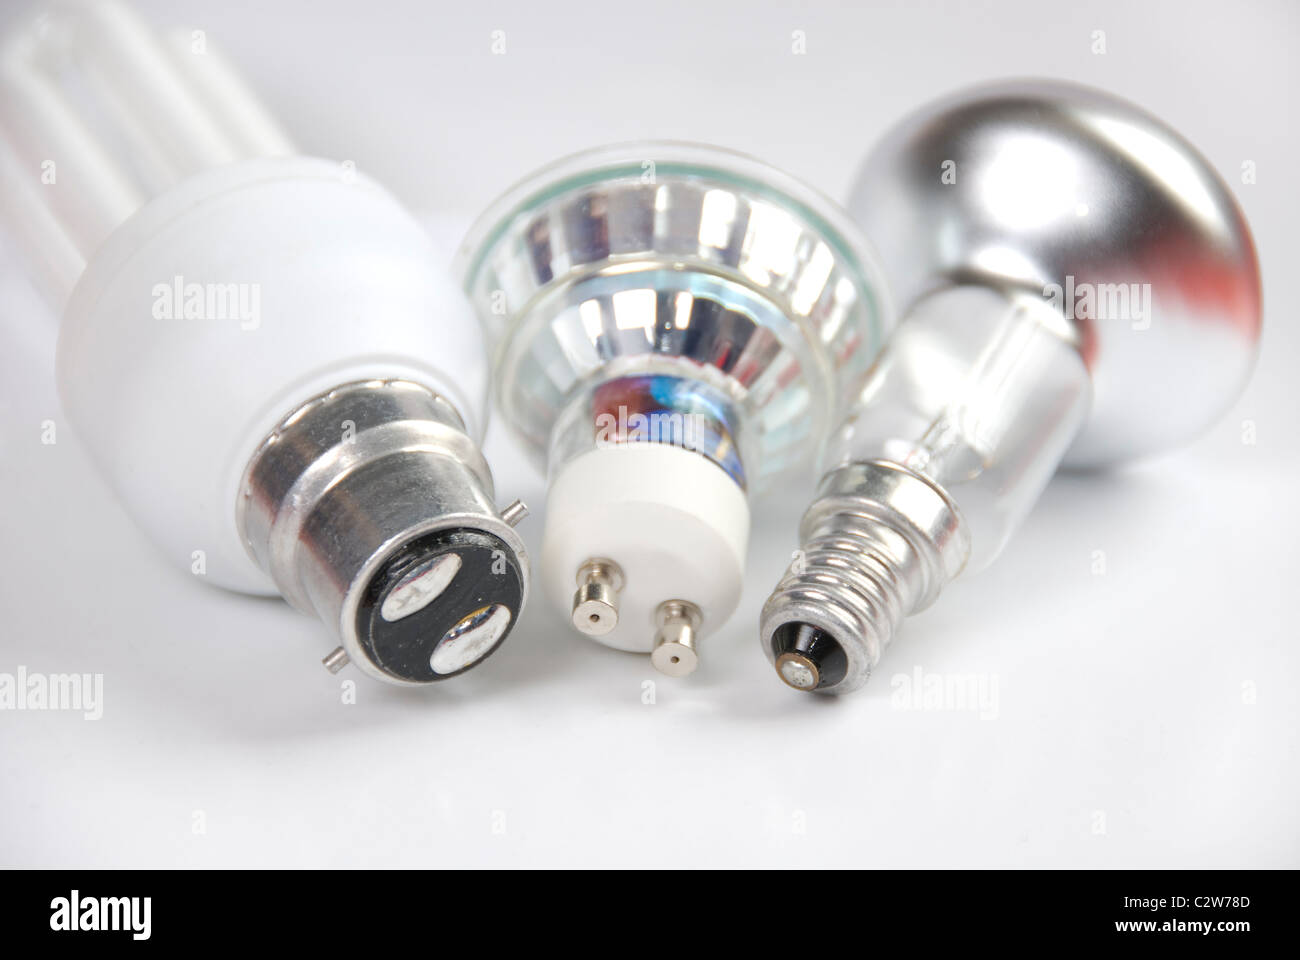 Different types of light bulb caps, Bayonet cap(BC) push and twist, Edison screw cap(ES), Halogen twist and lock, United Kingdom Stock Photo